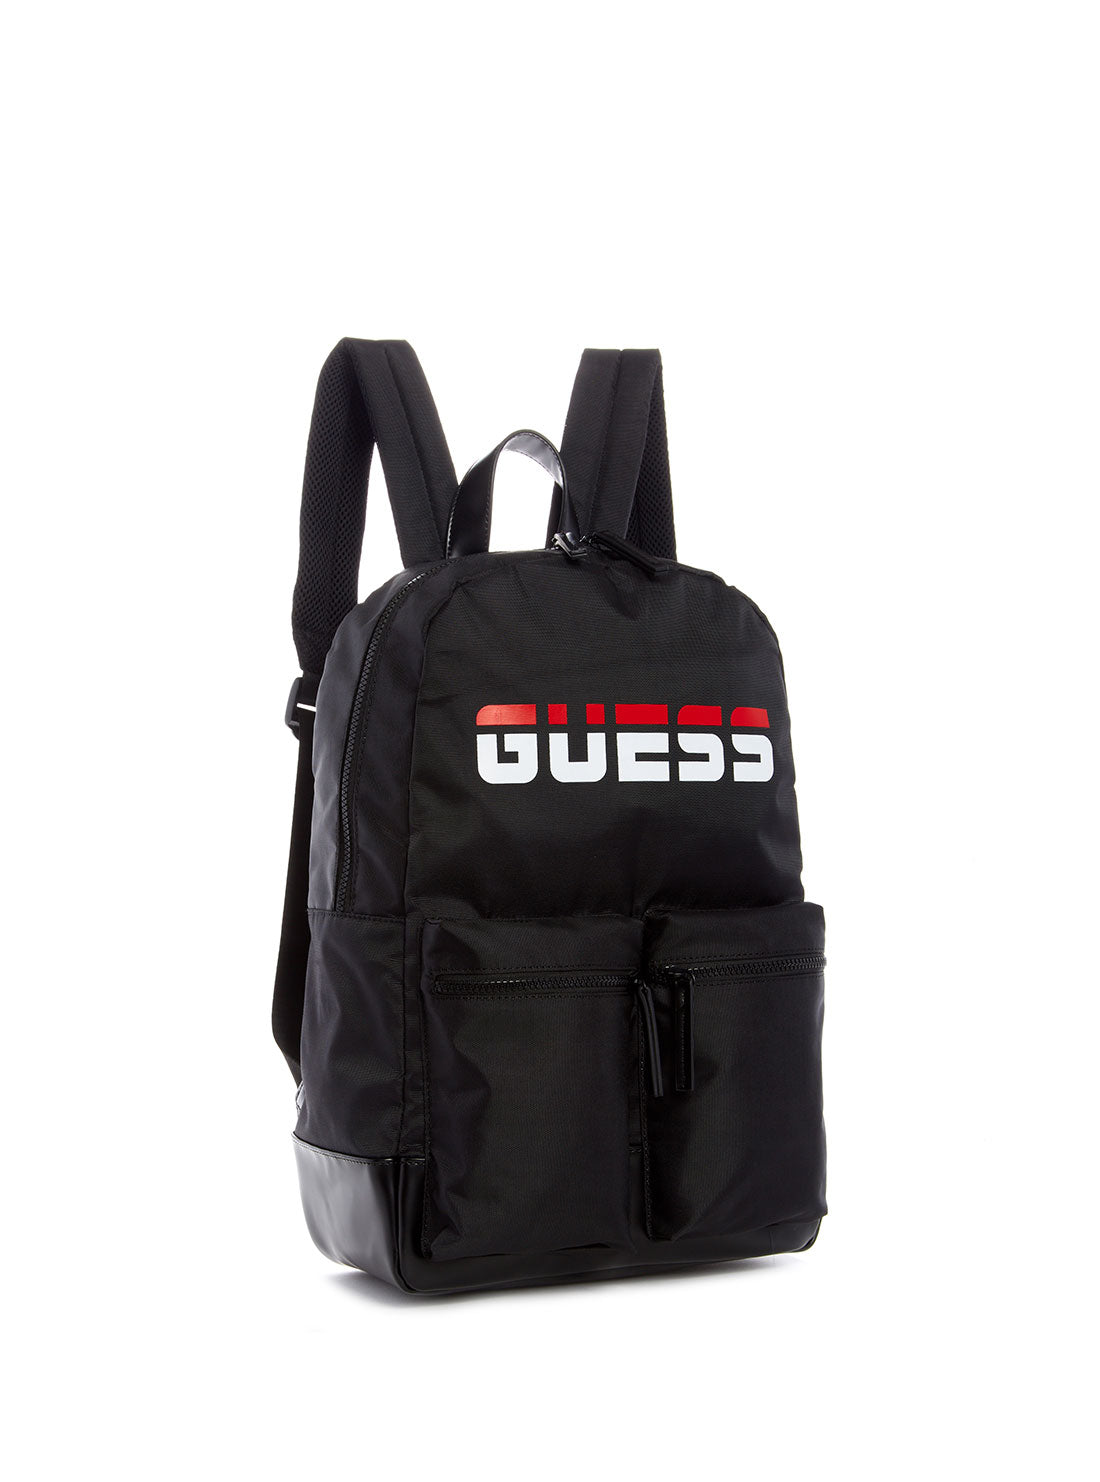 GUESS Mens Black Logo Duo Backpack NG773298 Front Side View